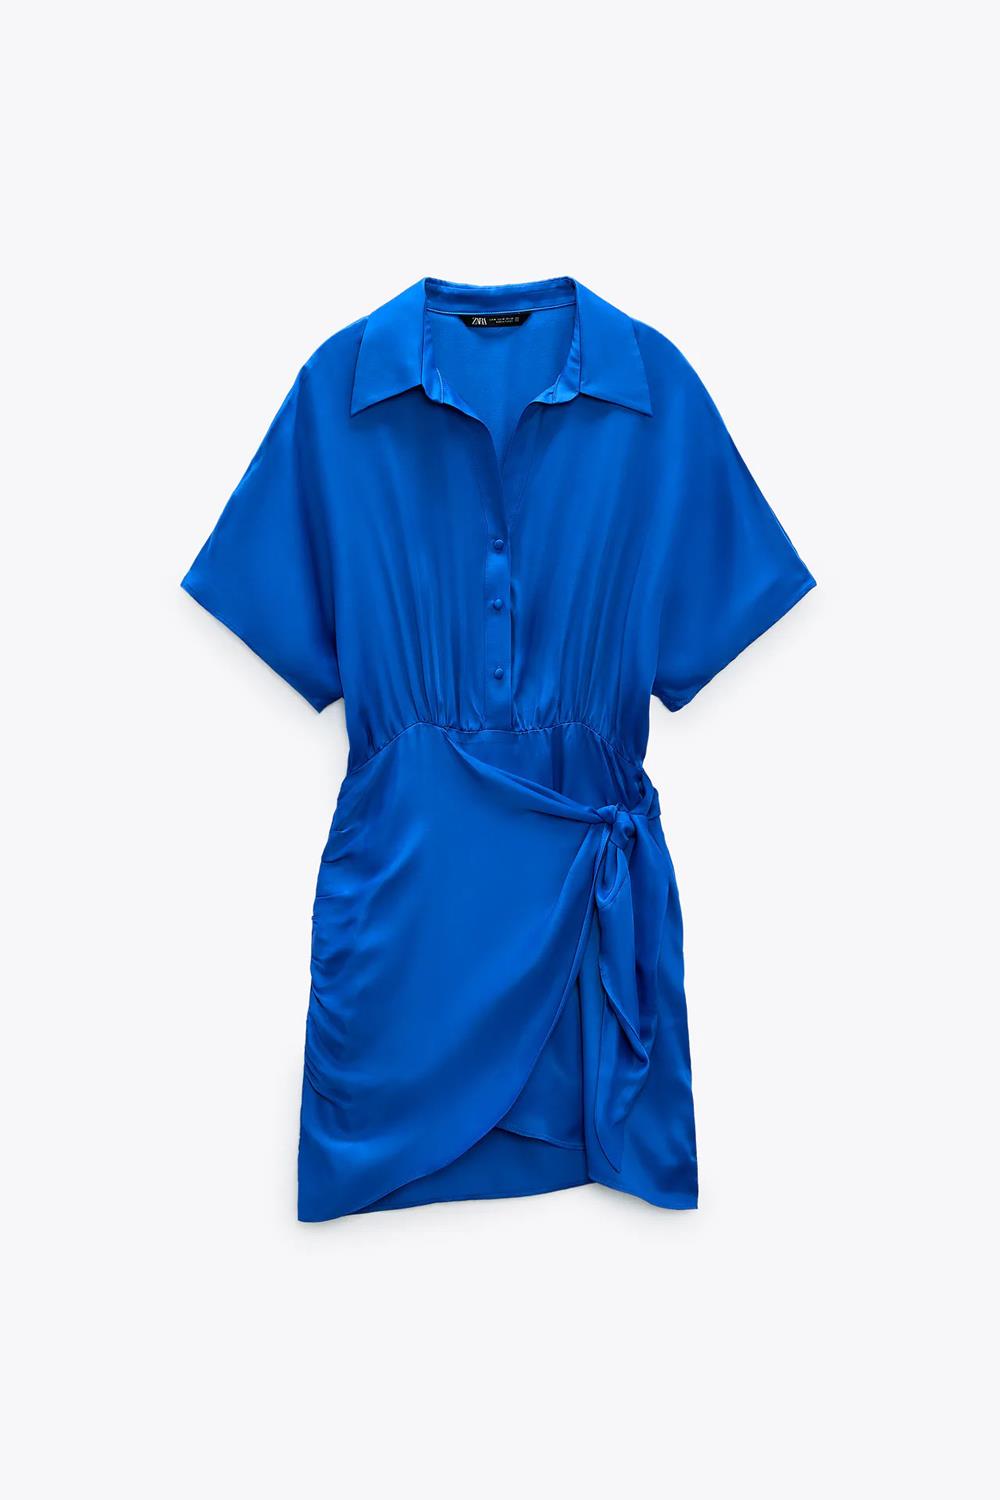 Vestido satinado cruzado azul eléctrico, de Zara